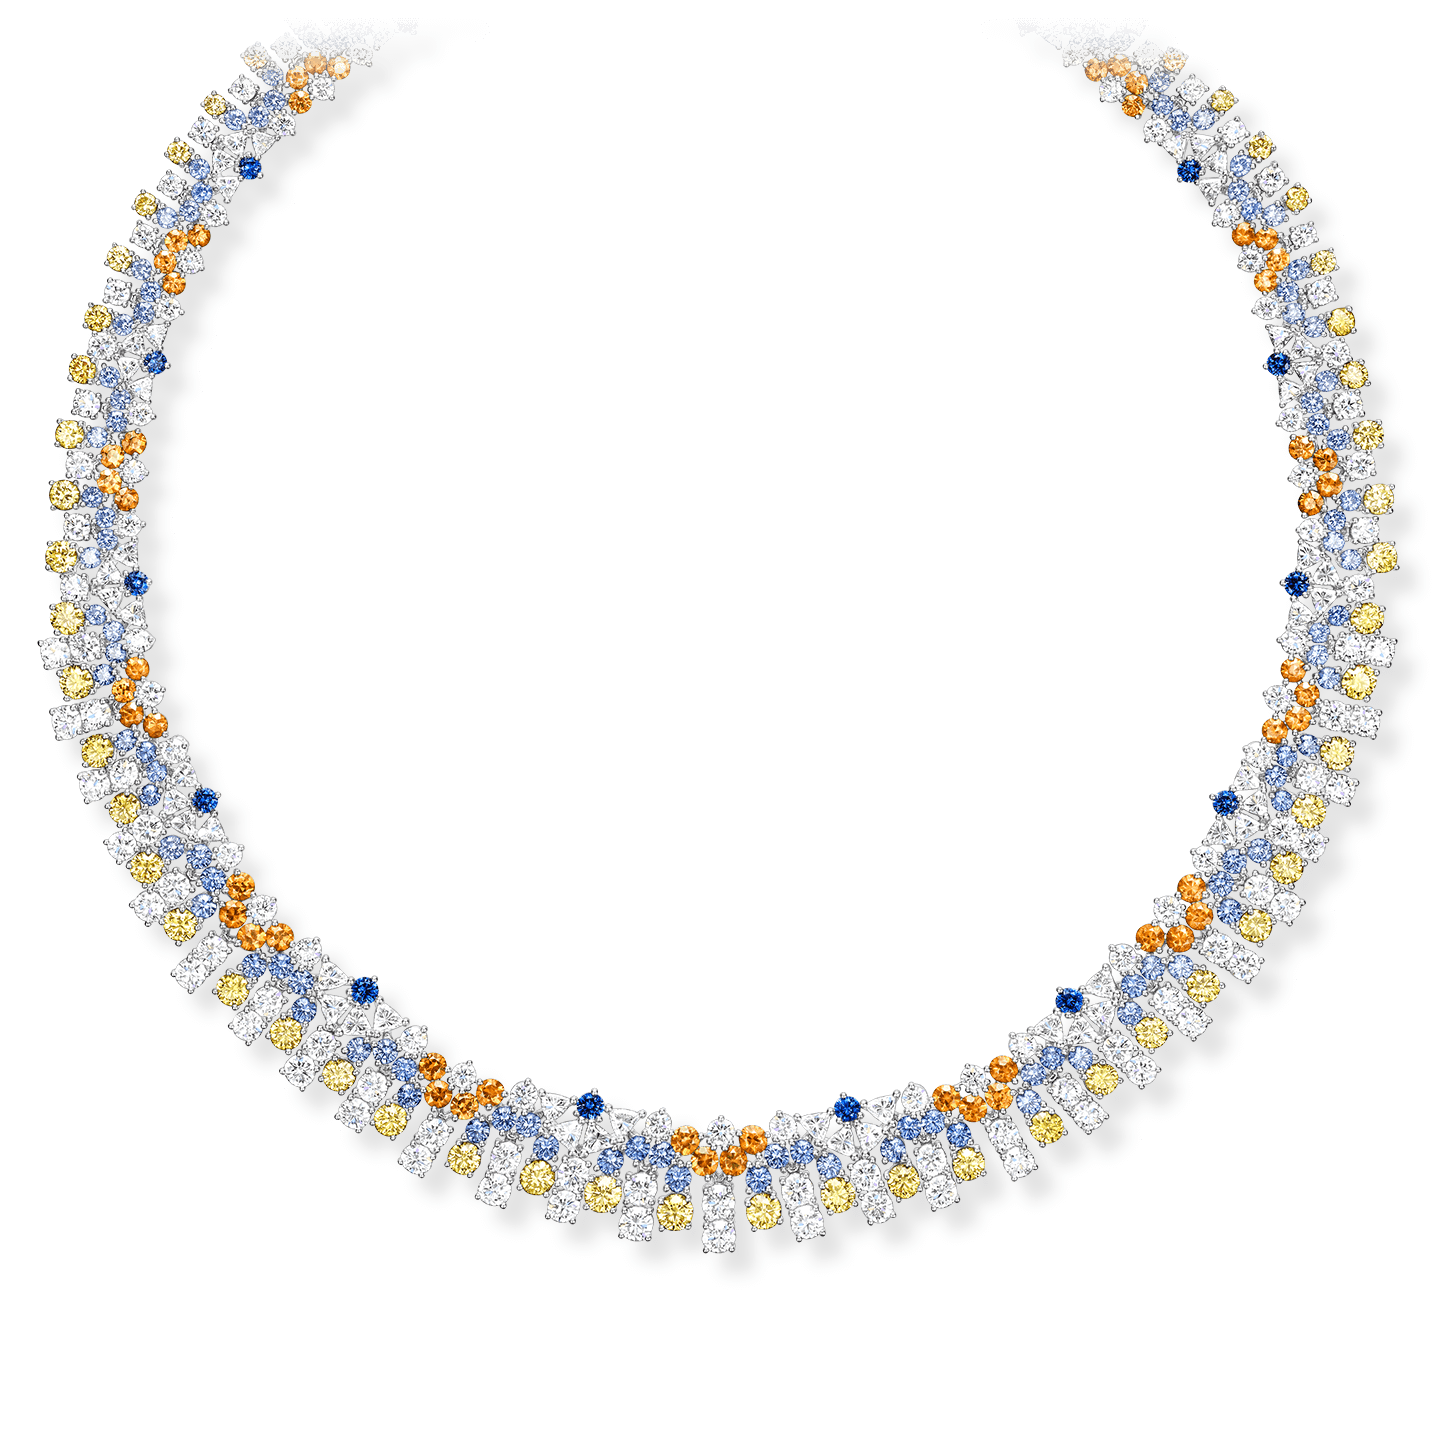 Manhattan Adornment Necklace with Sapphires, Spessartite Garnets, Yellow and White Diamonds